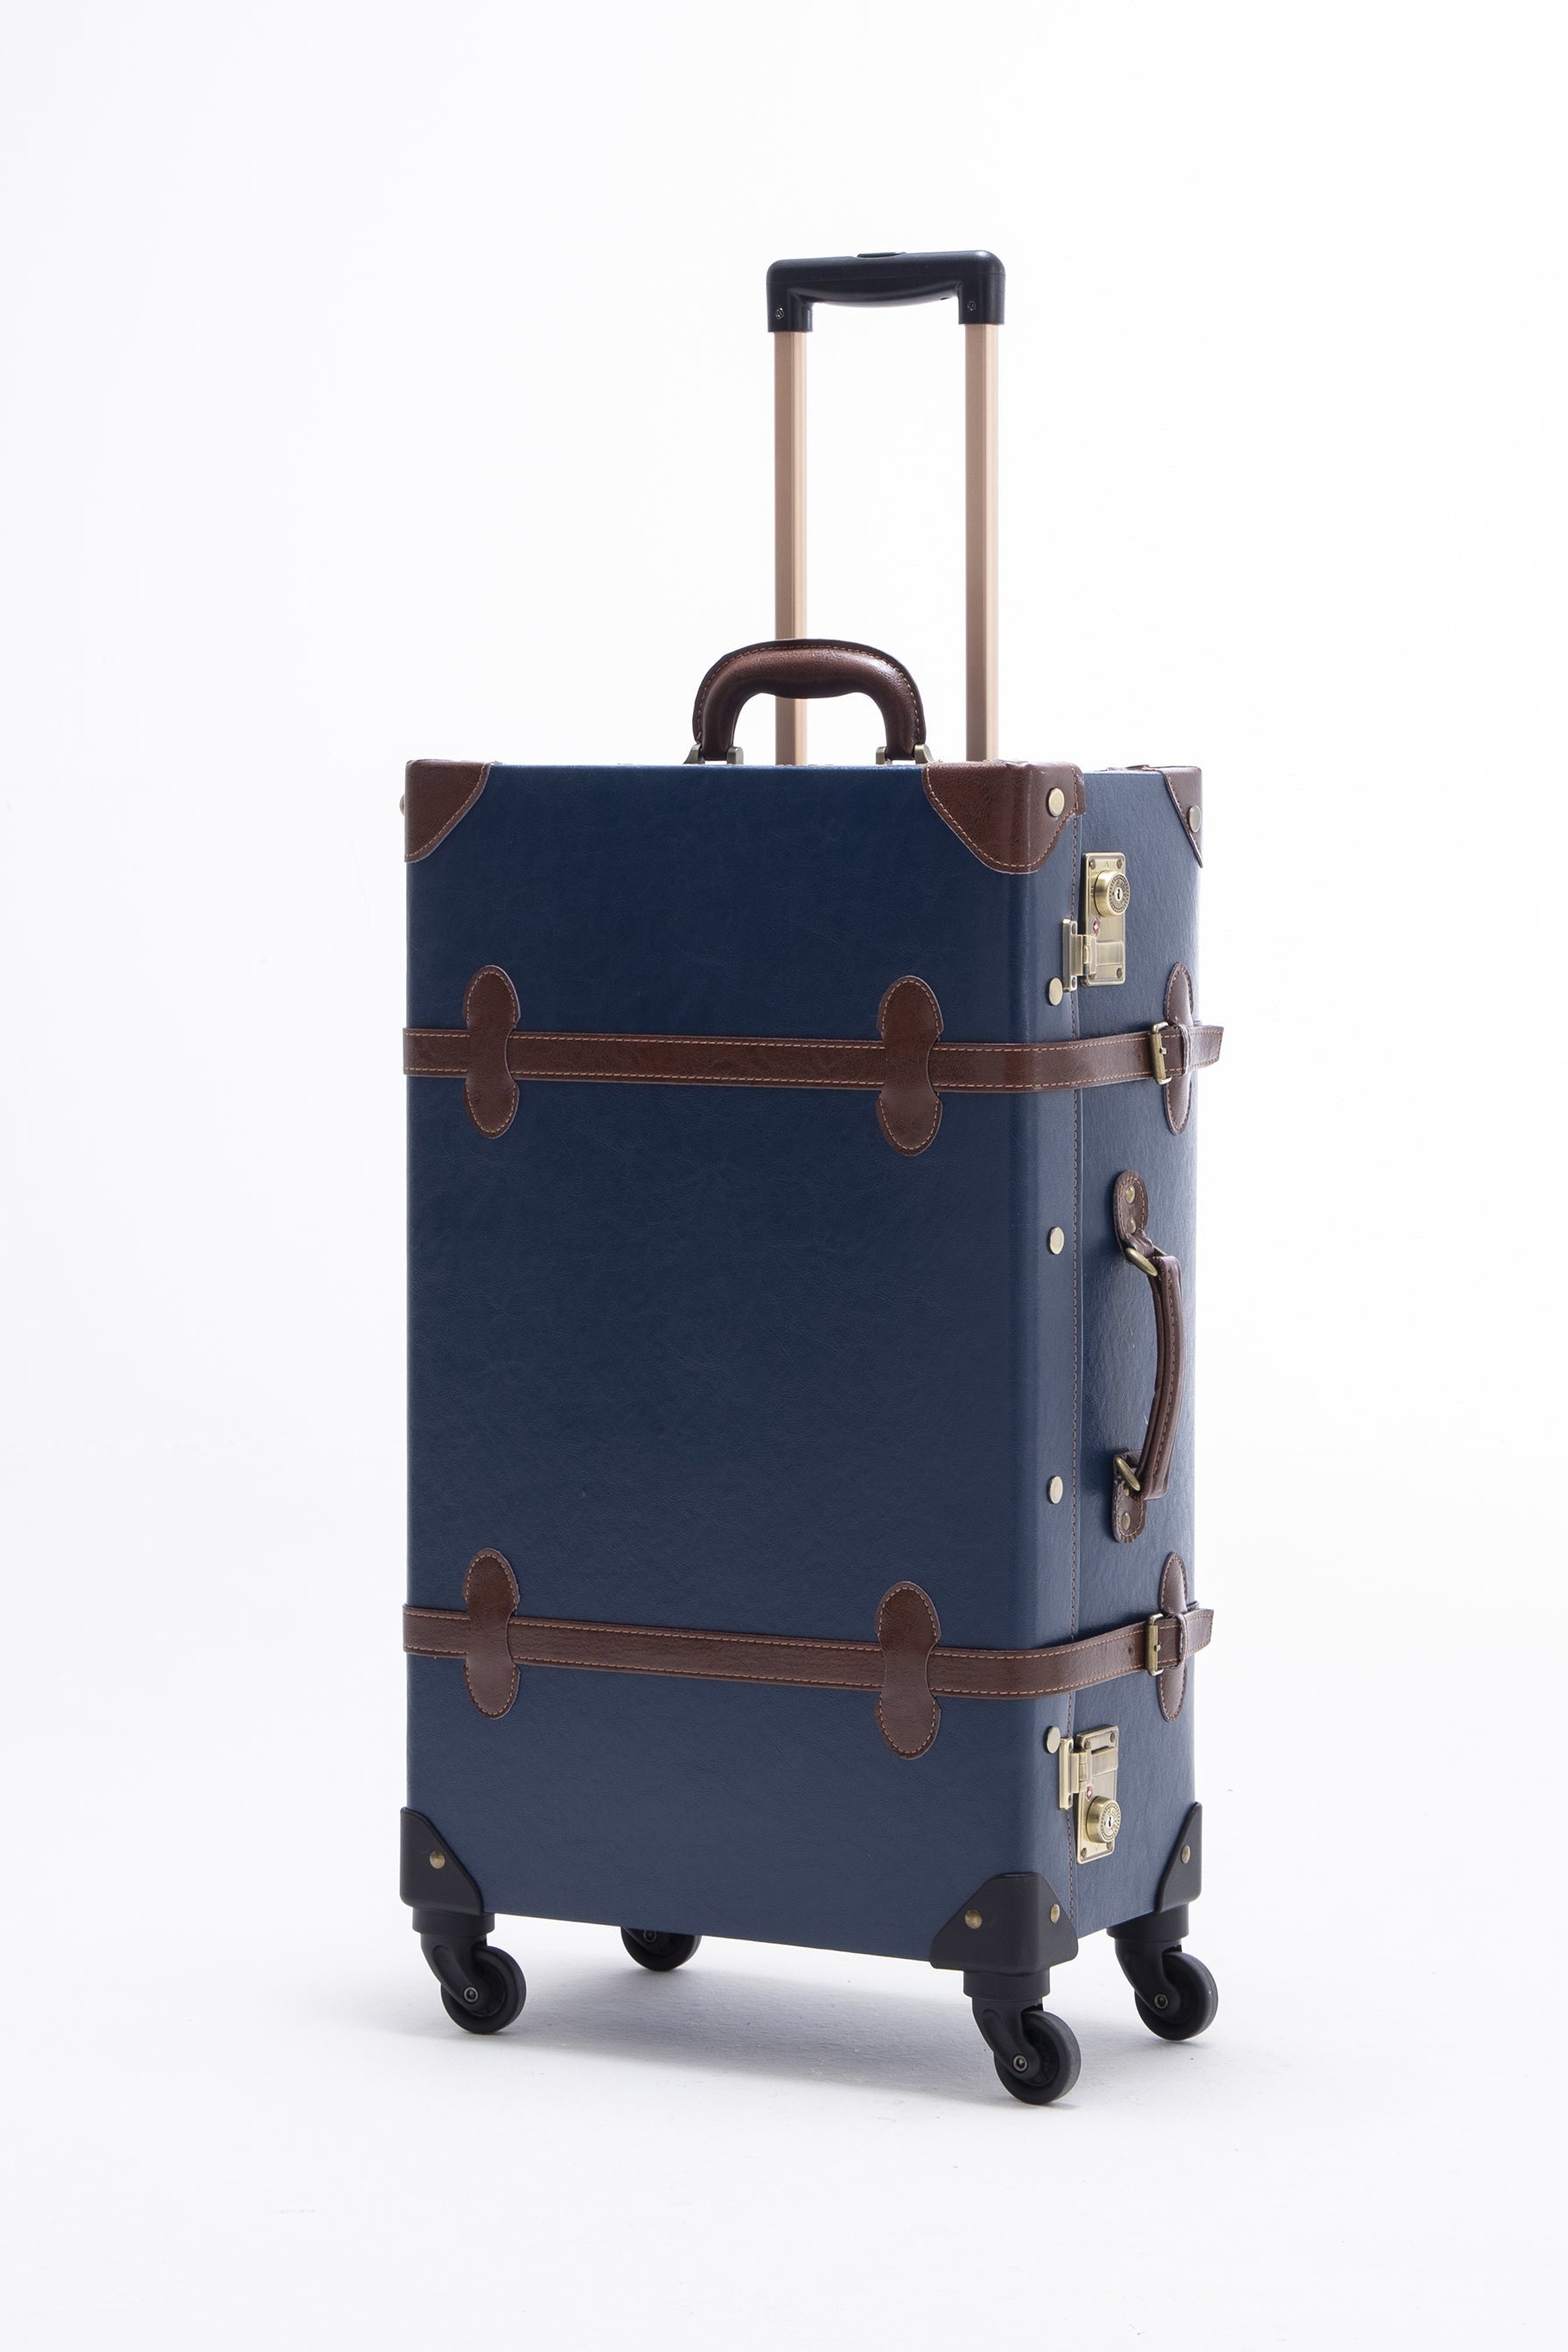 Minimalism 3 Pieces Luggage Set - Navy Blue's